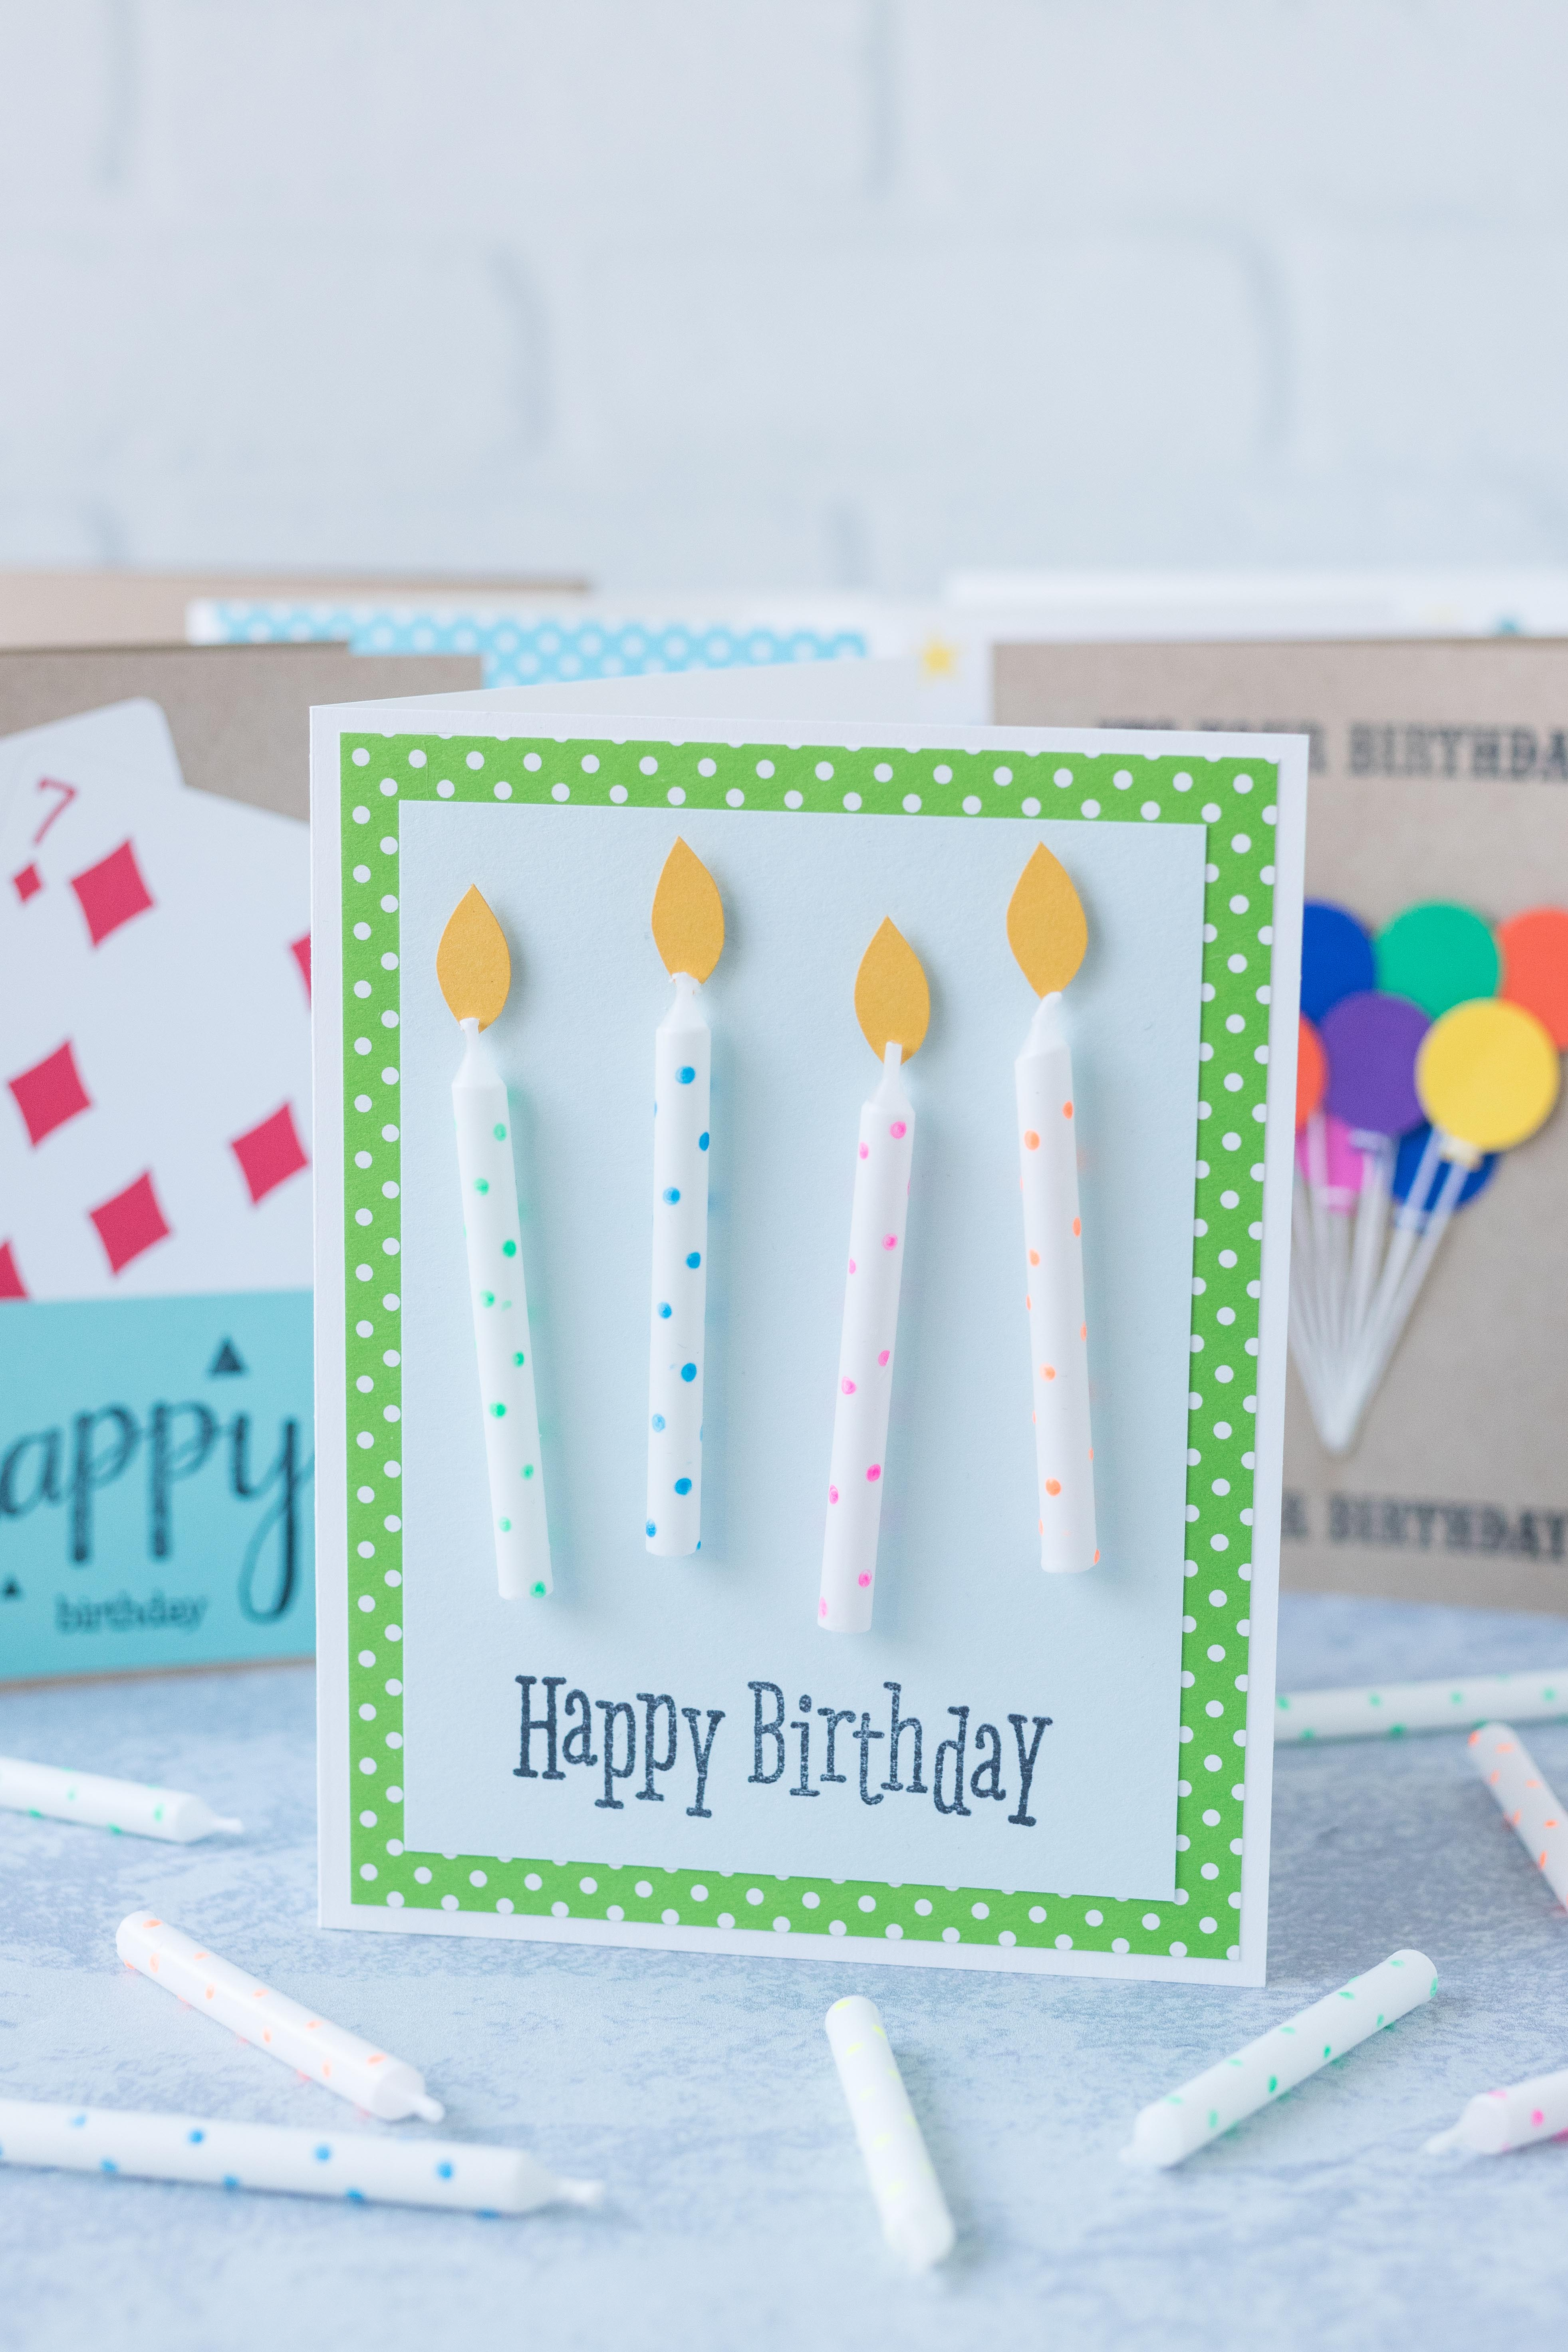 Handmade Birthday Cards Ideas 10 Simple Diy Birthday Cards Rose Clearfield